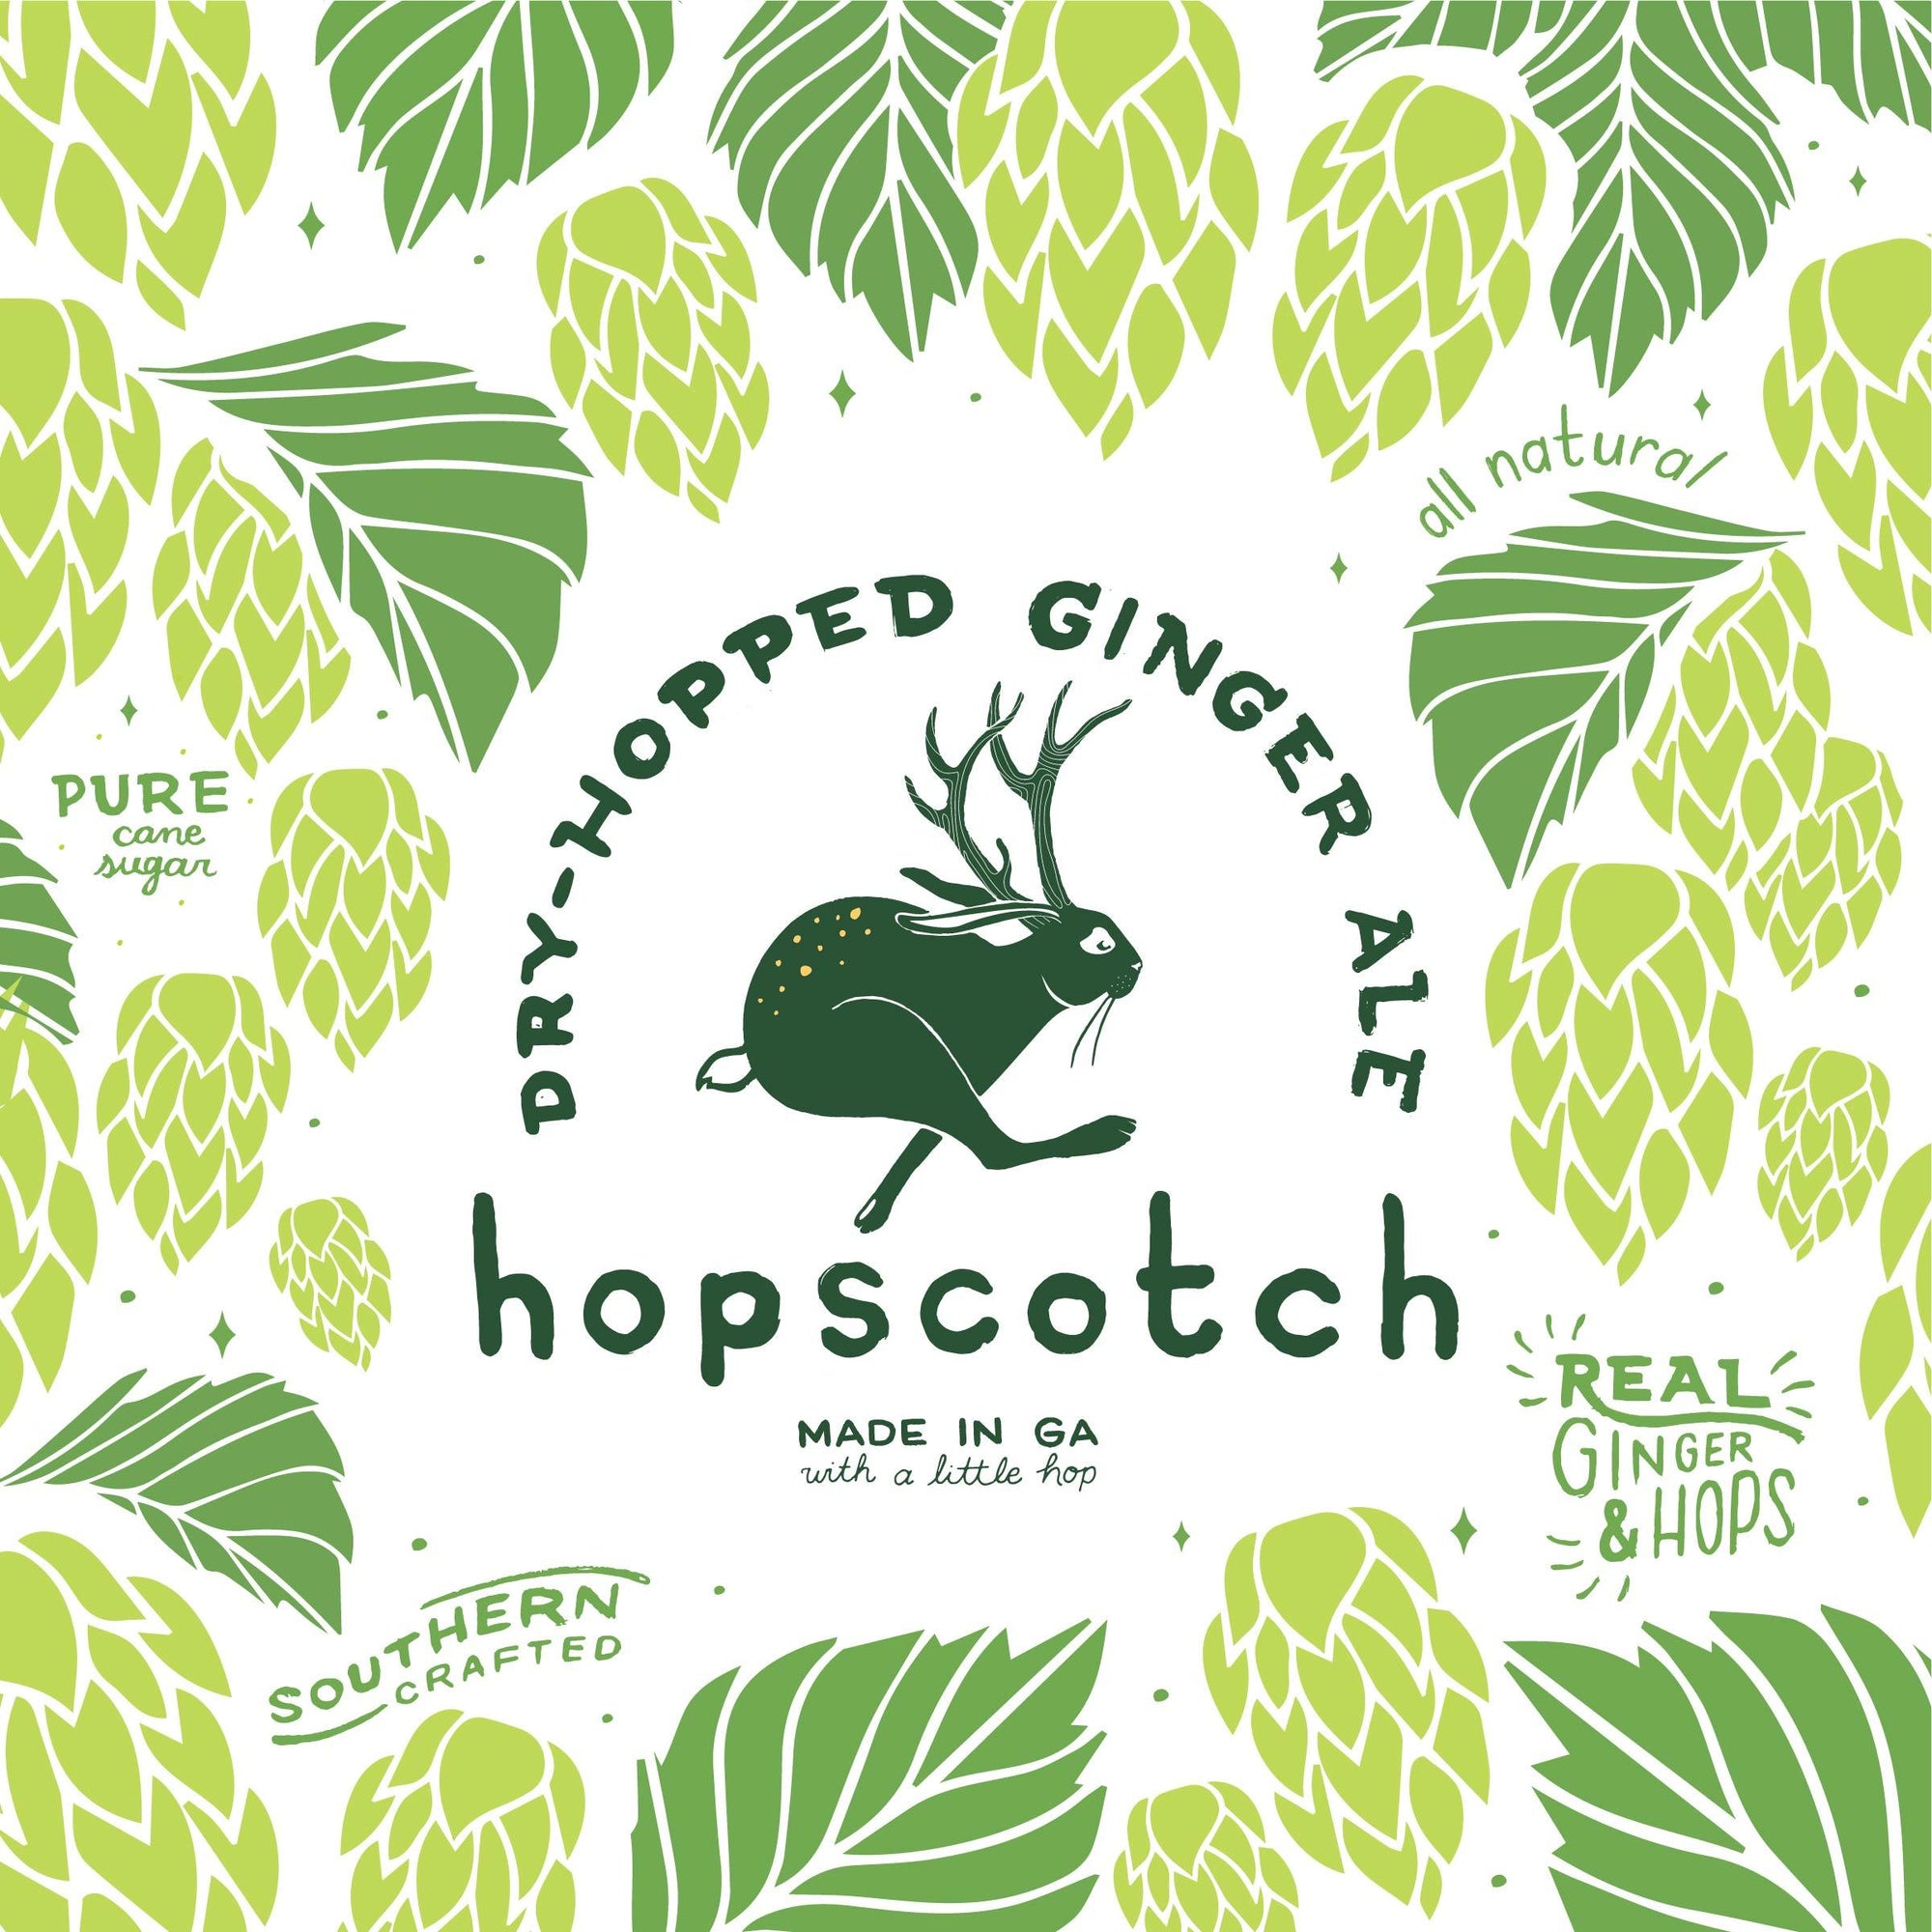 Hopscotch Dry-Hopped Ginger Ale - New Creation Soda Works